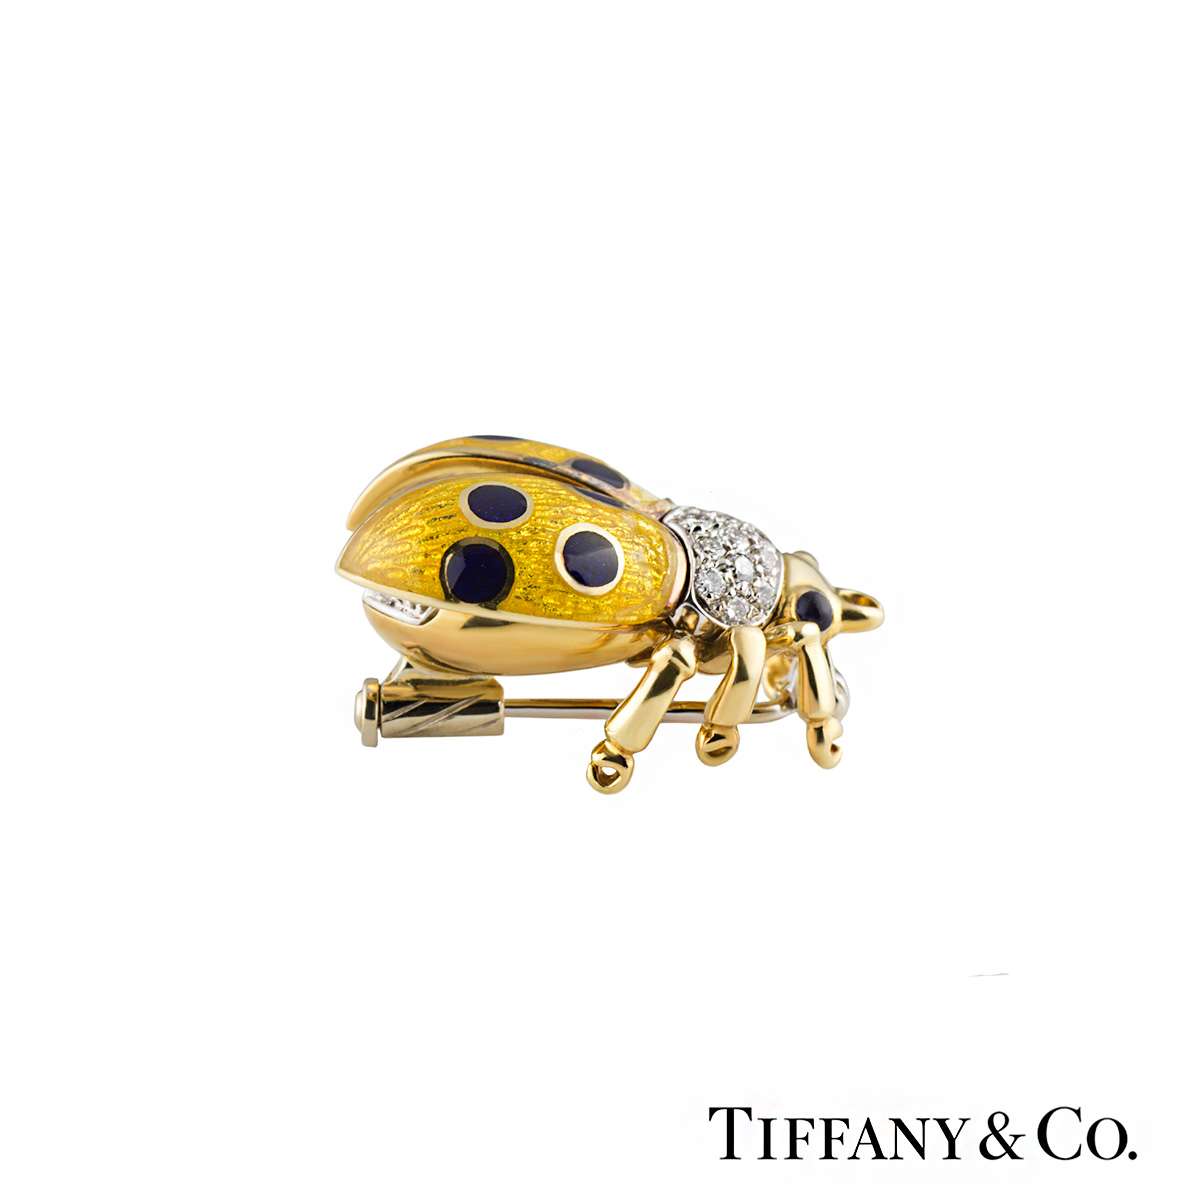 Tiffany & Co. Ladybird Diamond Brooch